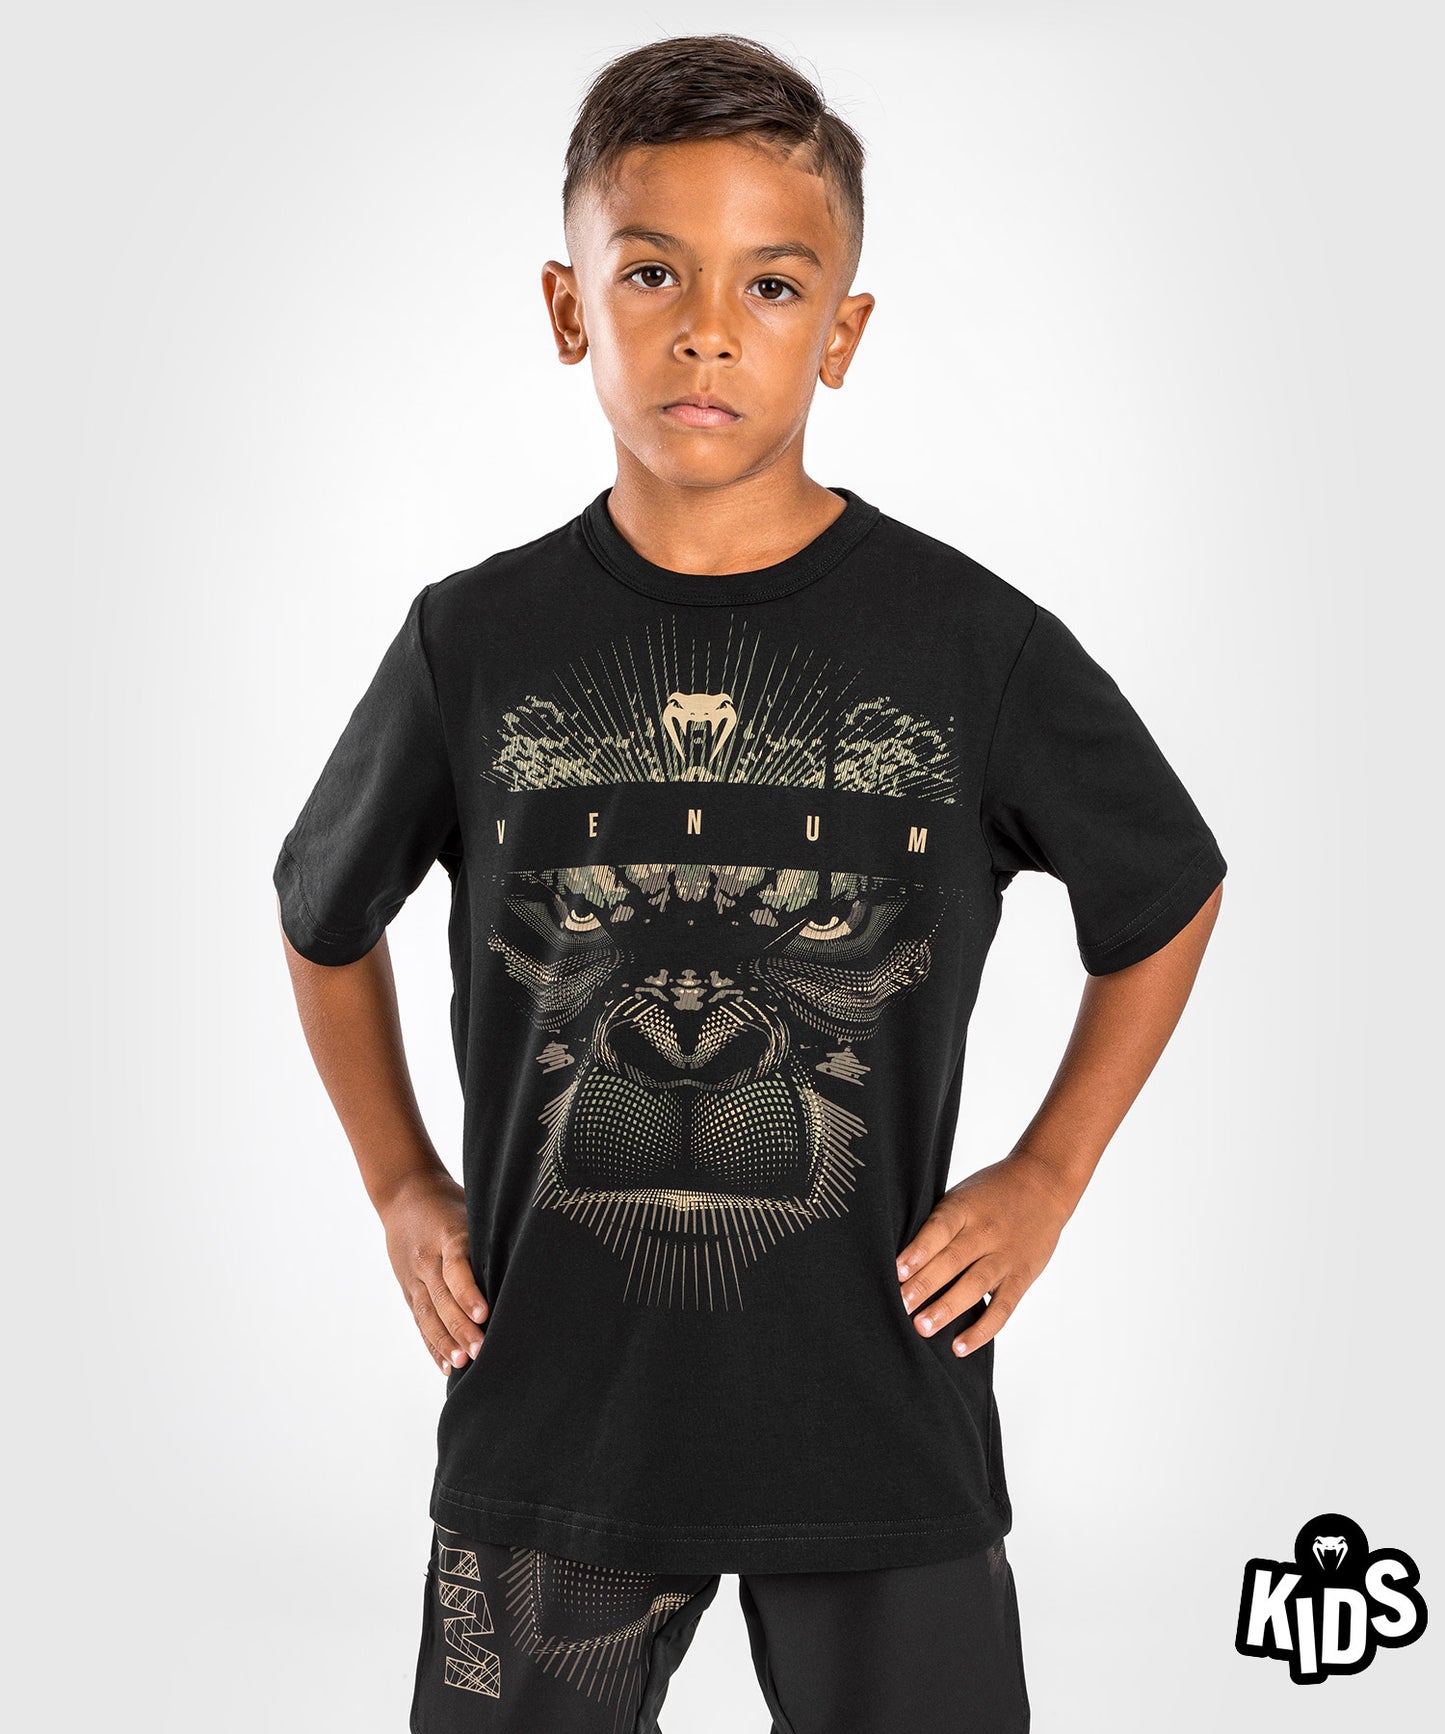 Venum Gorilla Jungle T-Shirt for Kids - Black/Sand